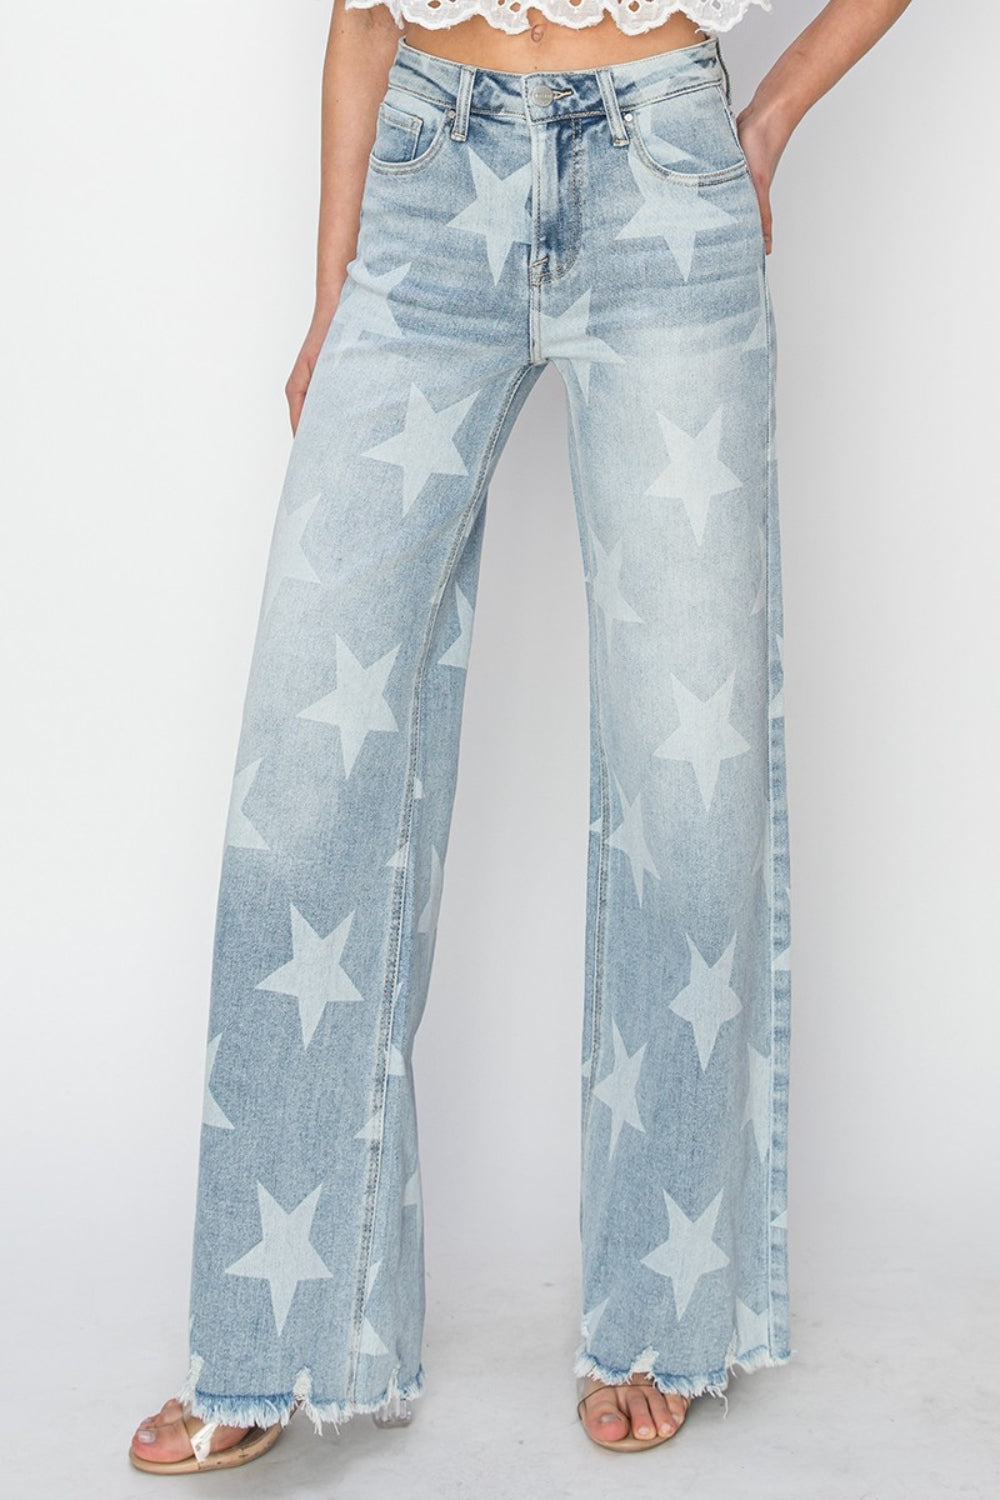 RISEN Full Size Raw Hem Star Wide Leg Jeans - The Teal Antler Boutique